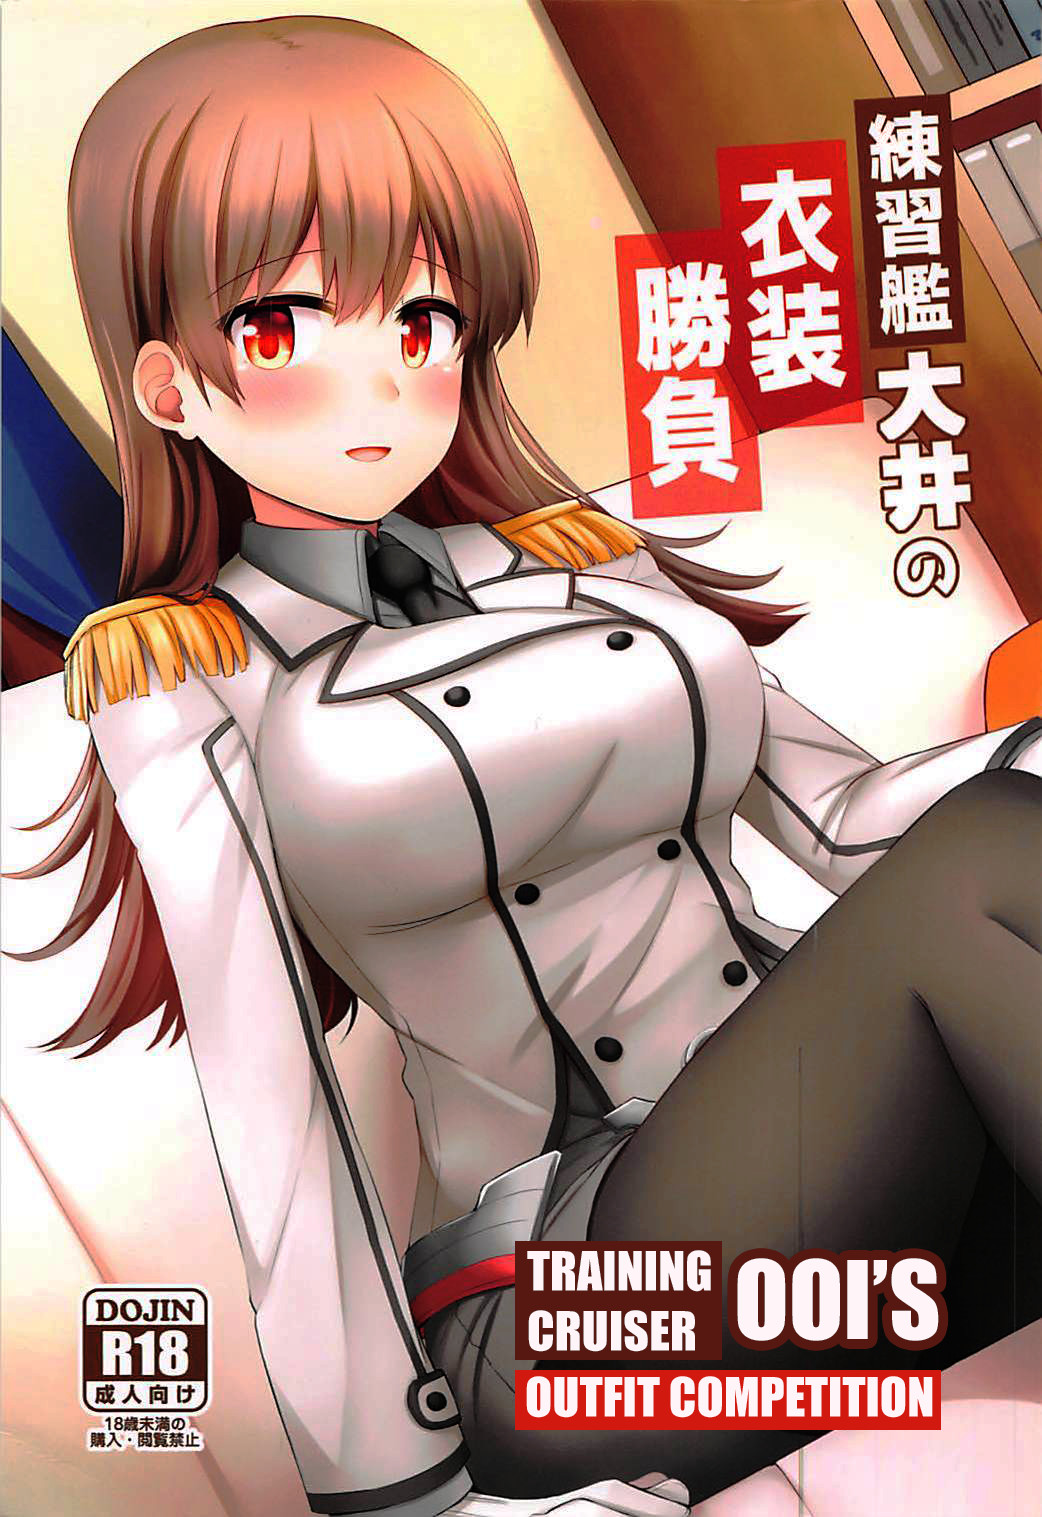 Hentai Manga Comic-Training Cruiser Ooi's Outfit Competition-Read-1